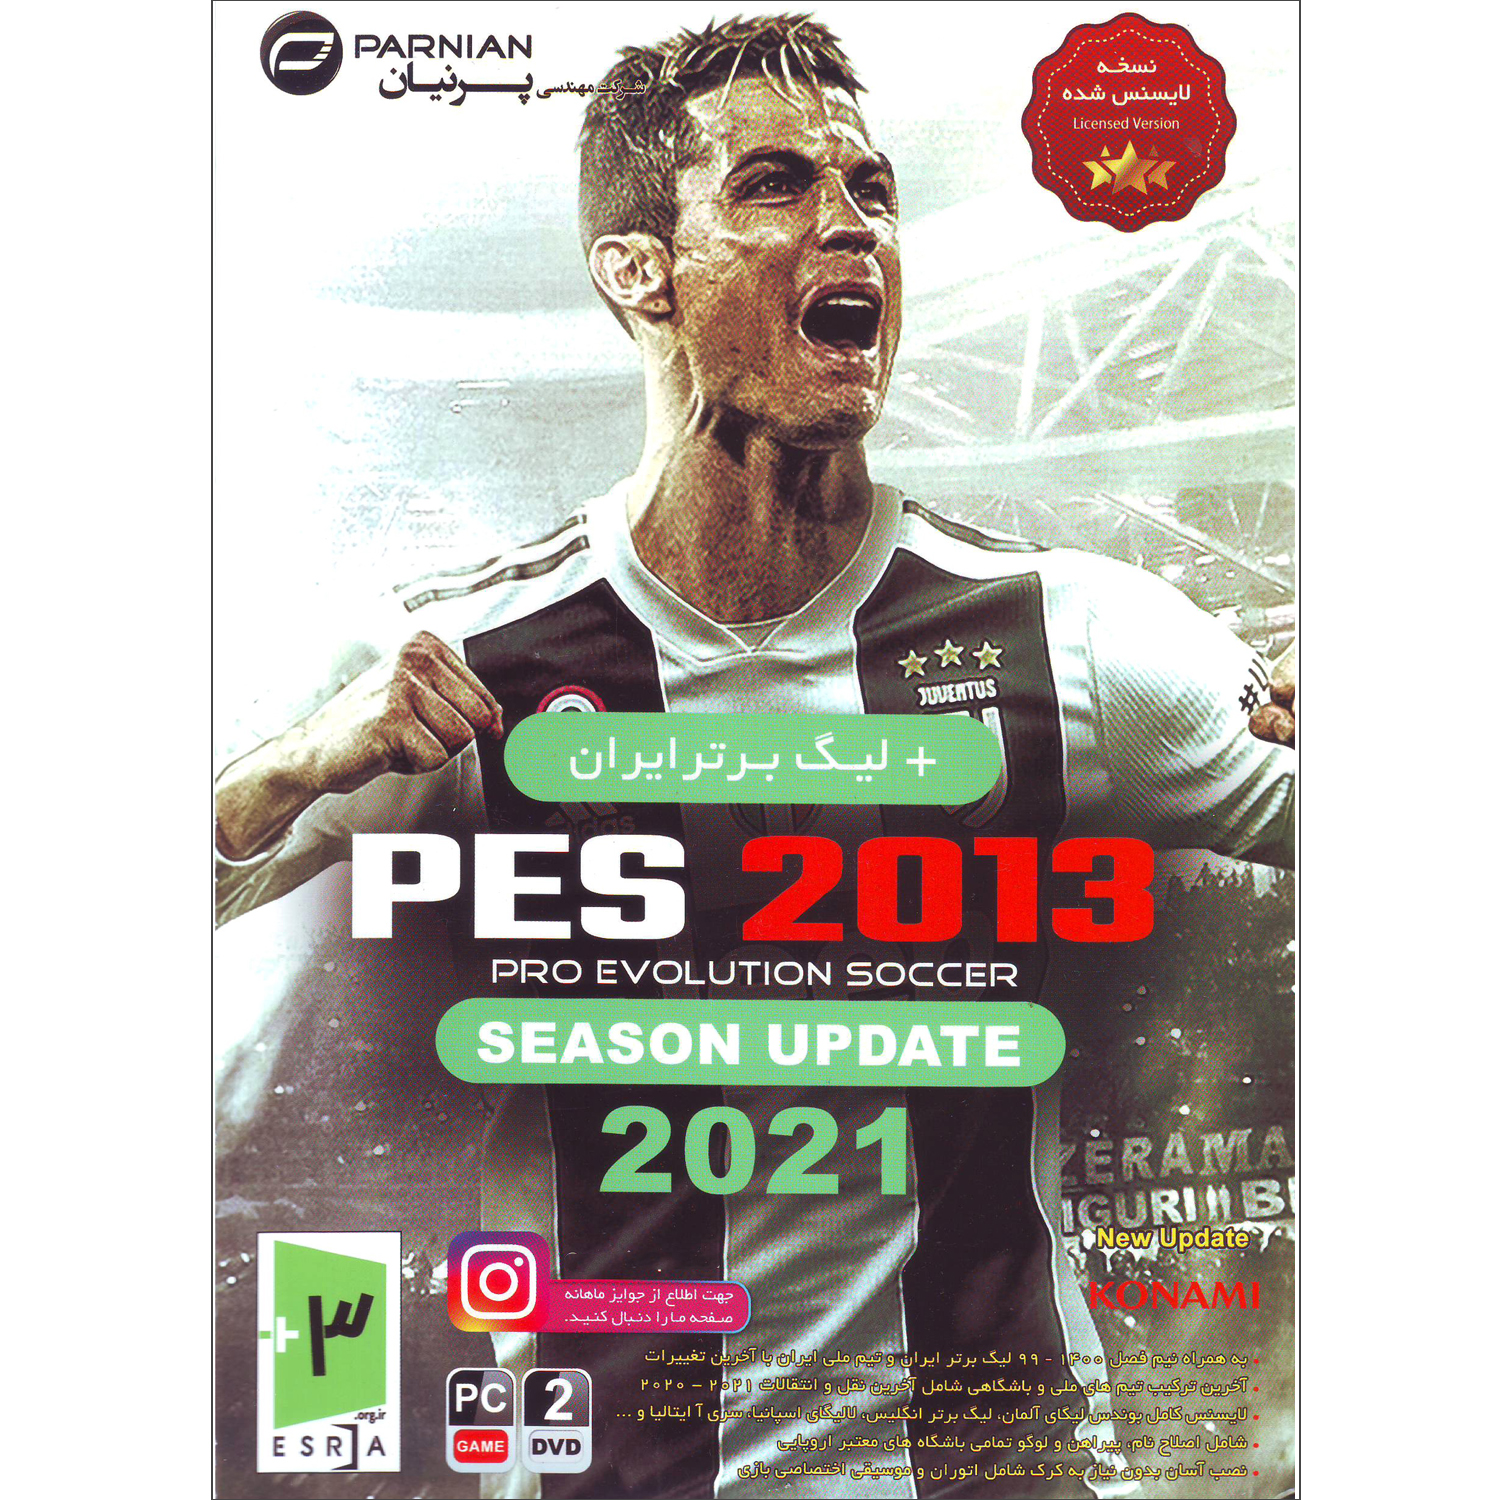 بازی  Pes 2013 Season Update 2021 مخصوص PC نشر پرنیان